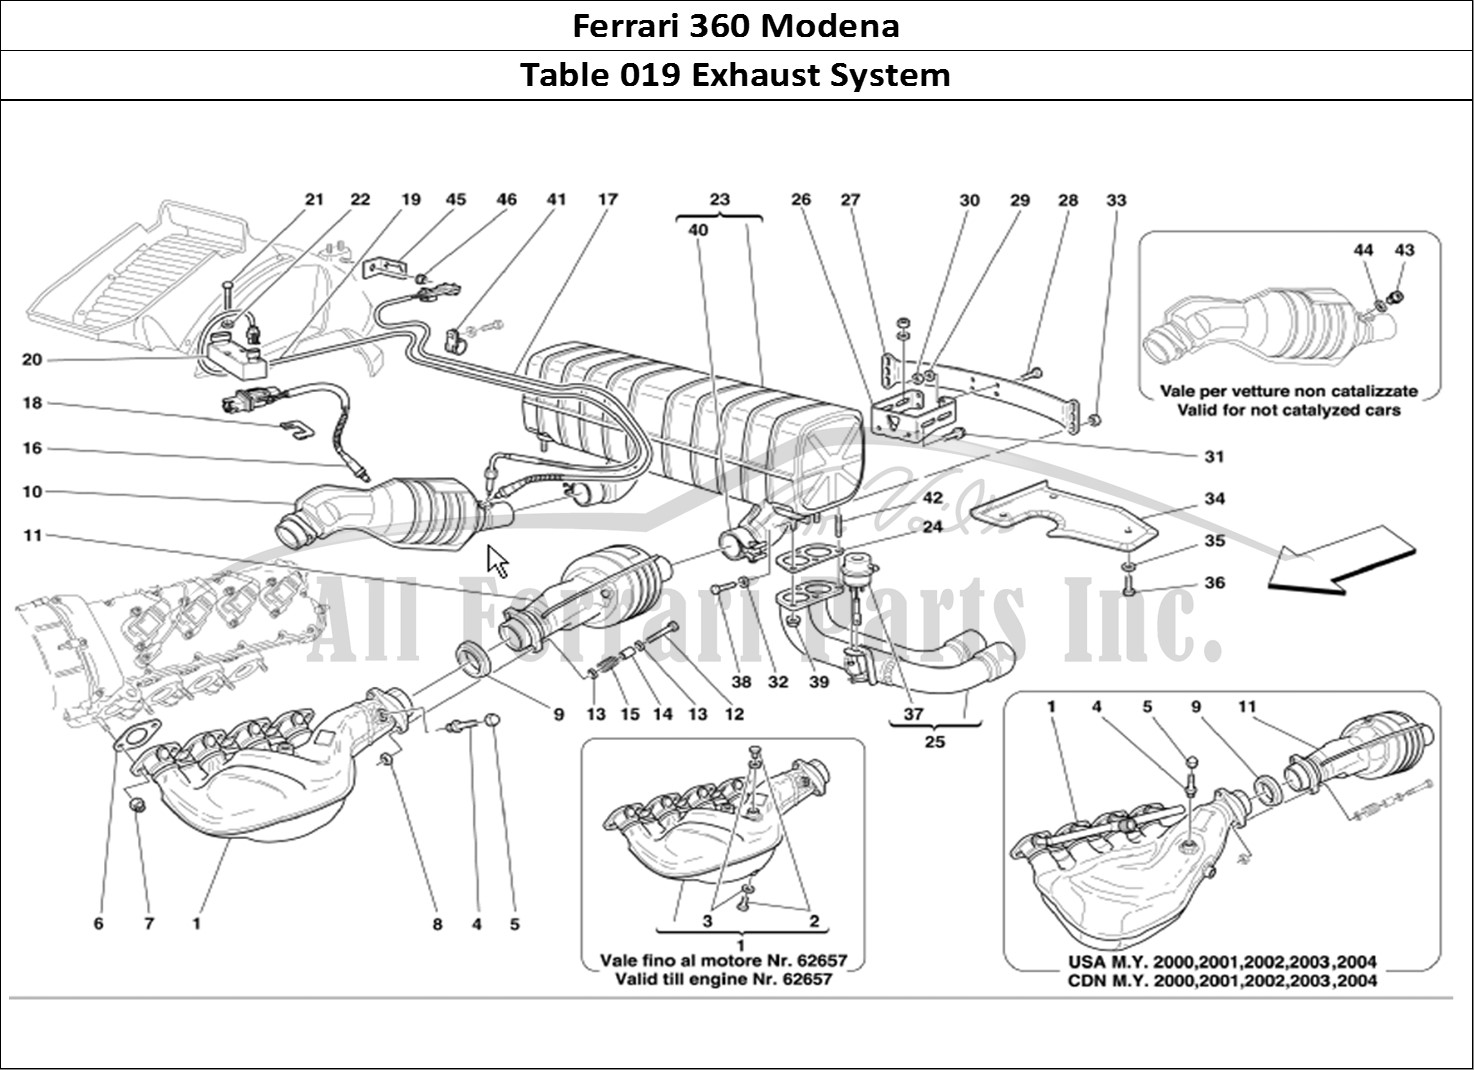 Ferrari Parts Ferrari 360 Modena Page 019 Exhaust System